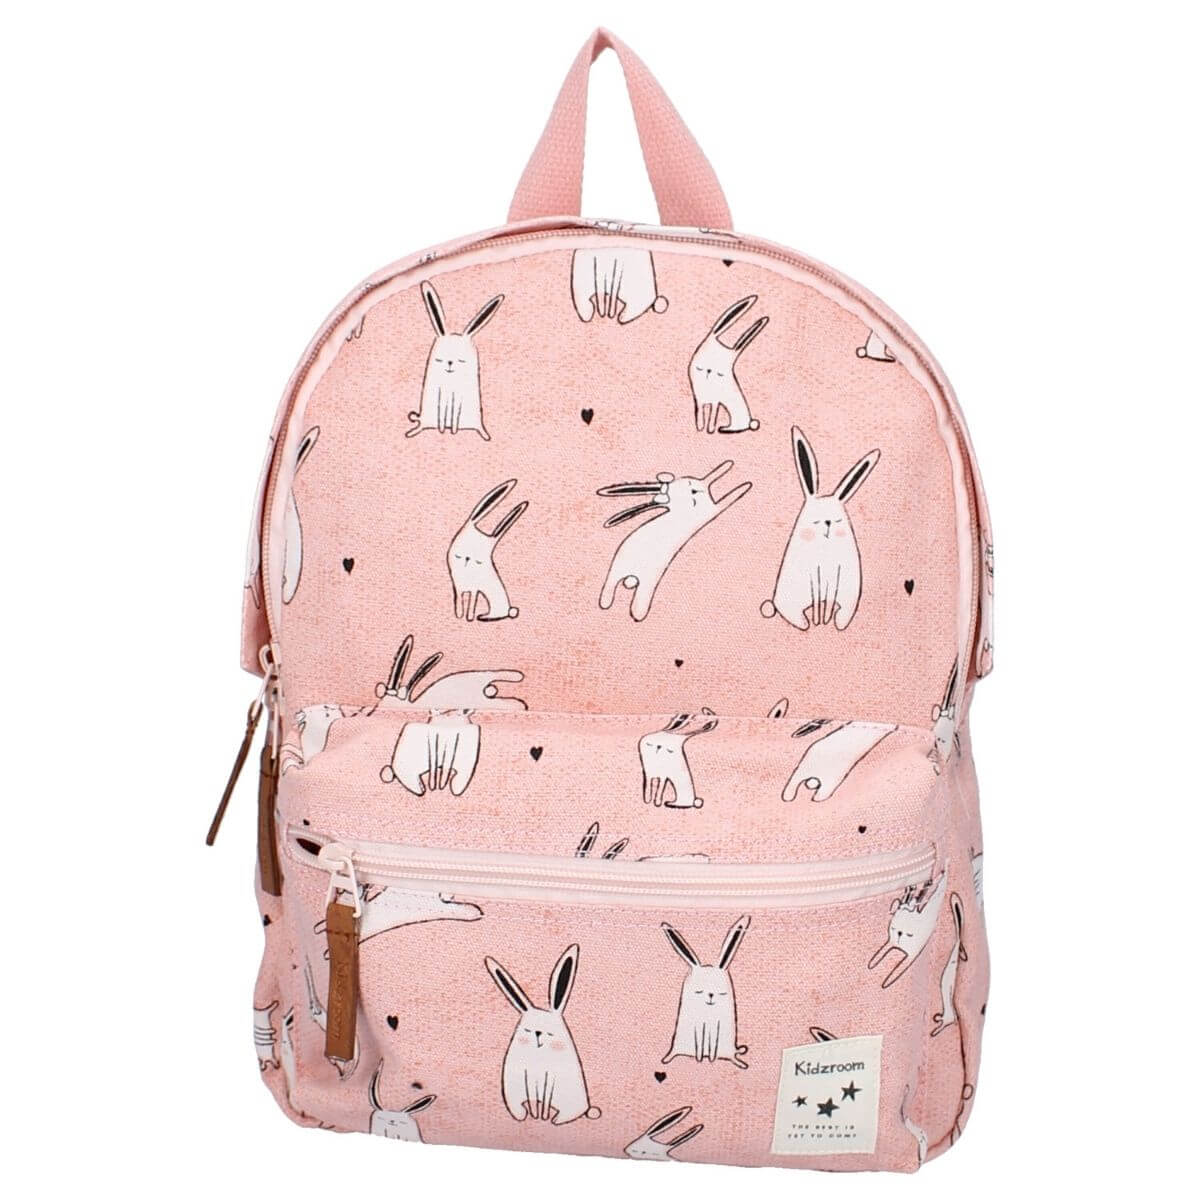 Kidzroom Pink Rabbits Backpack